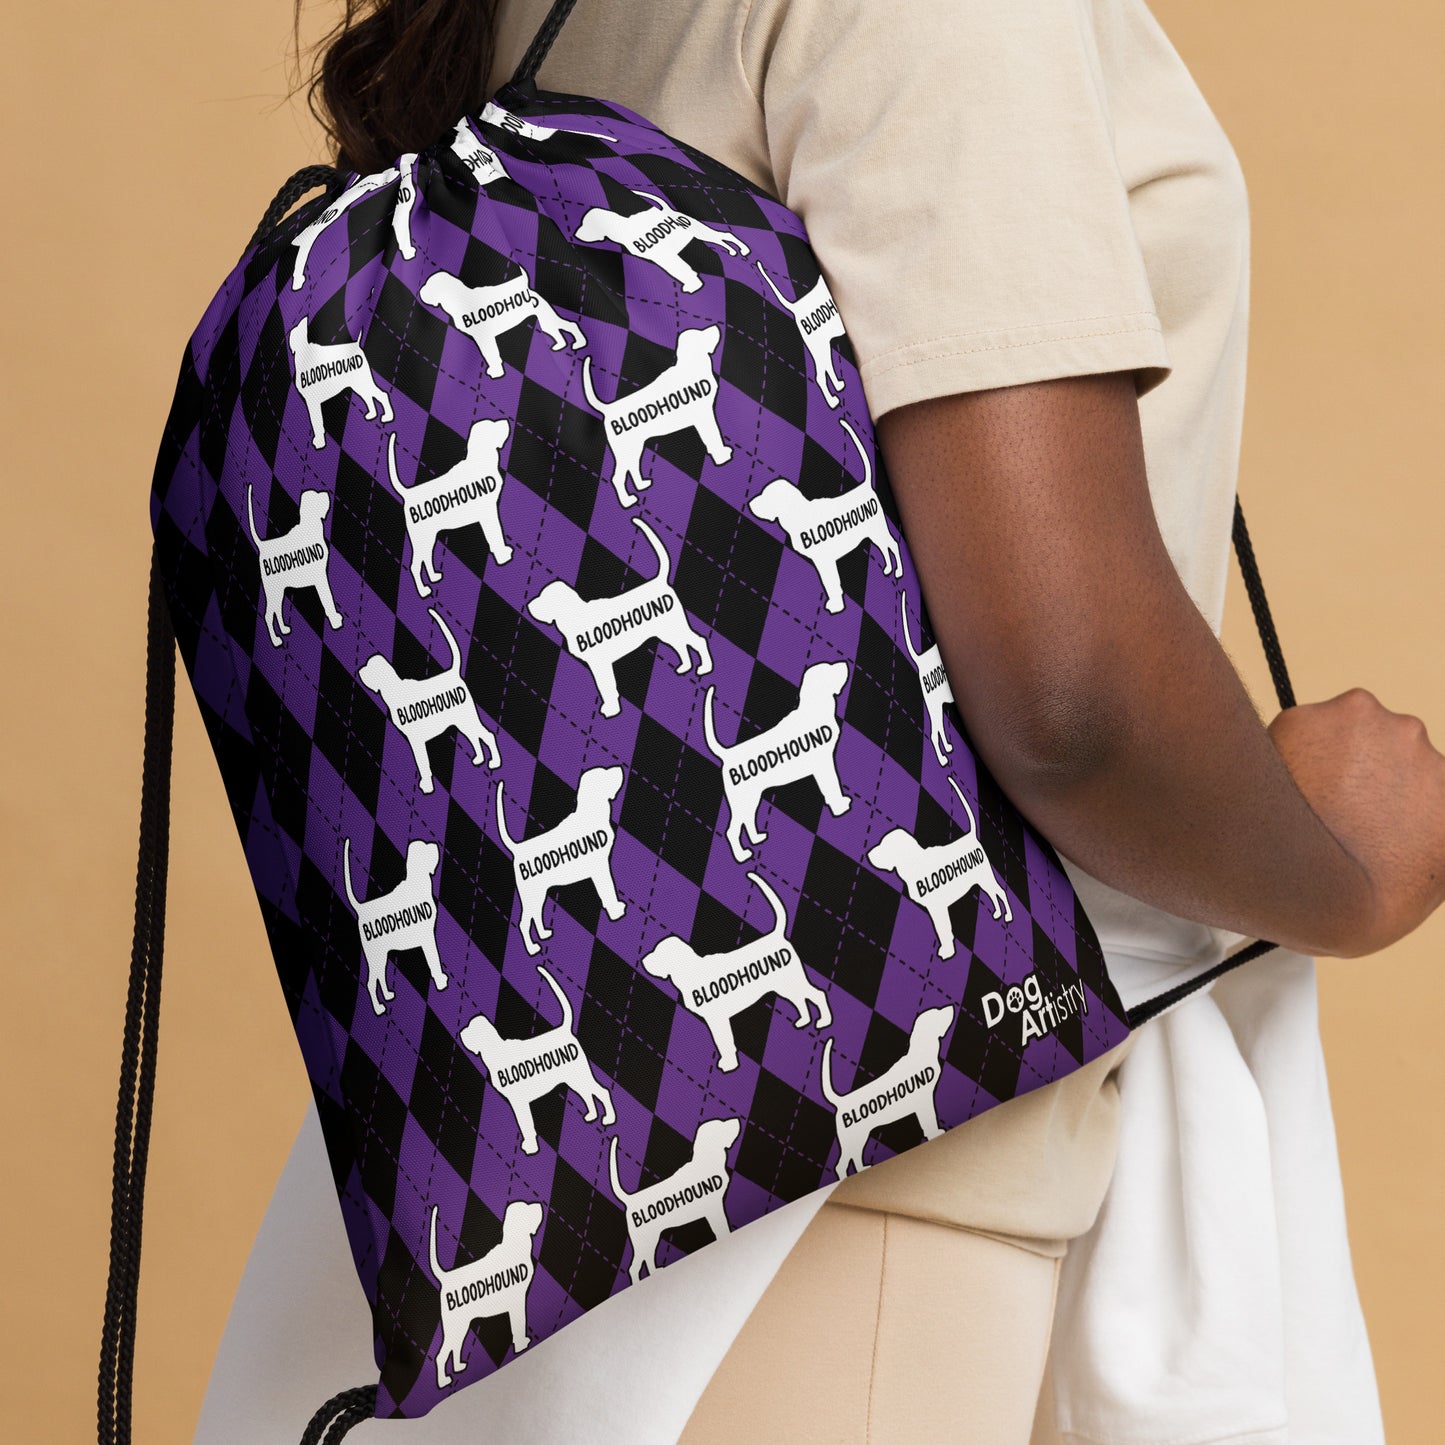 Bloodhound Argyle Purple and Black Drawstring bag